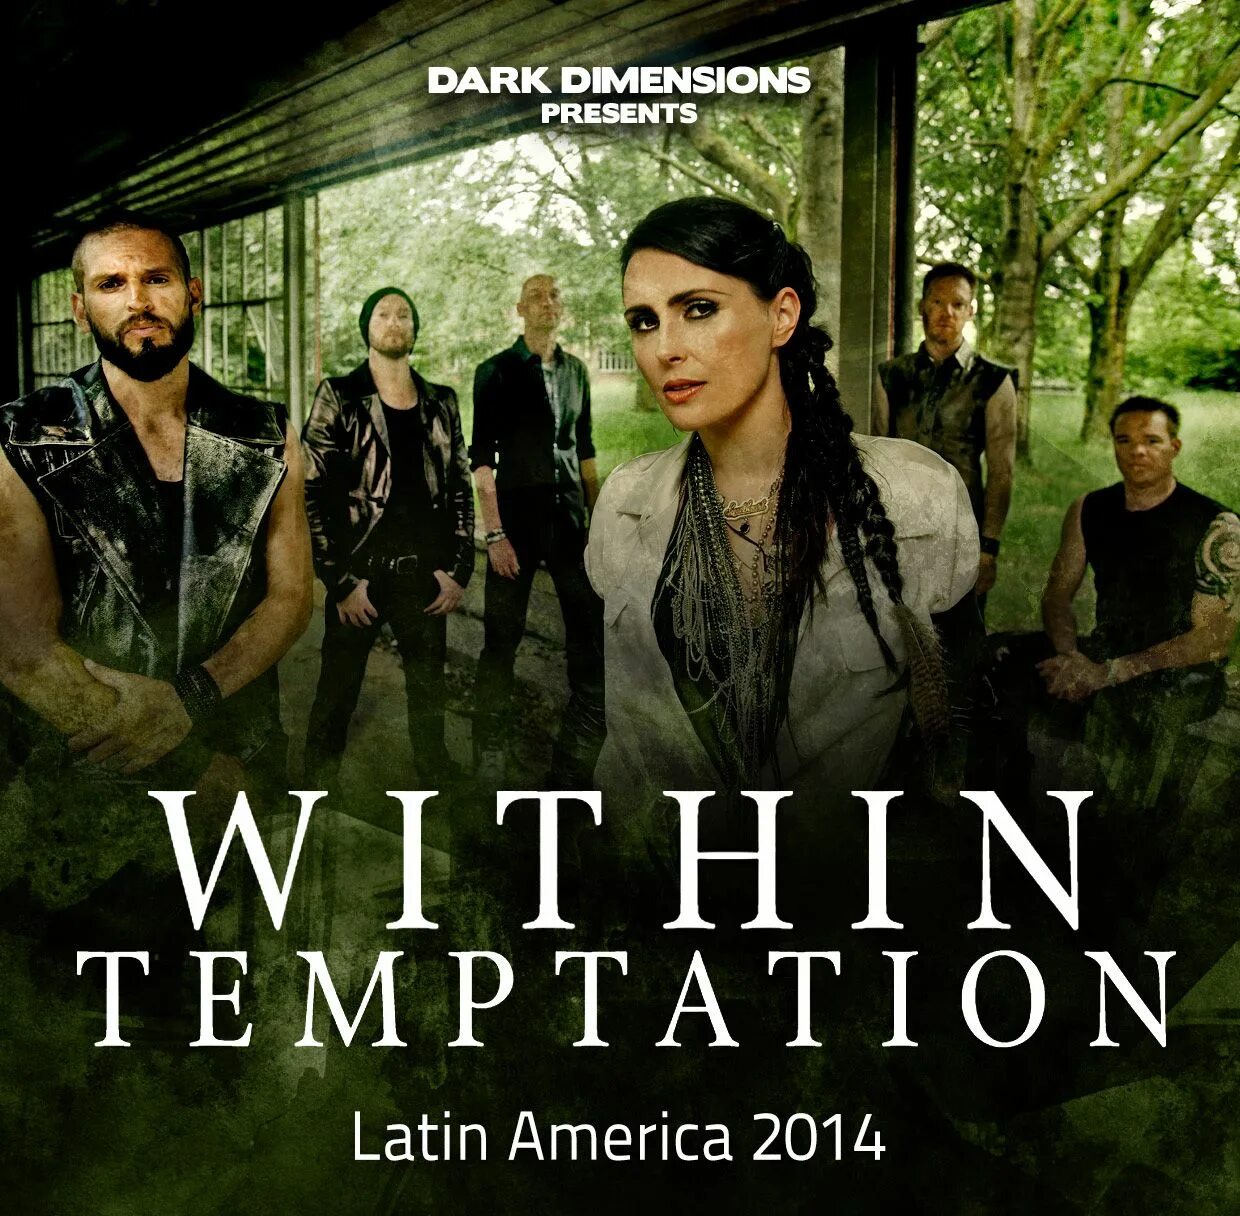 Within temptation альбомы. Группа within Temptation. Within Temptation обложки. Within Temptation фото. Within Temptation 2014.